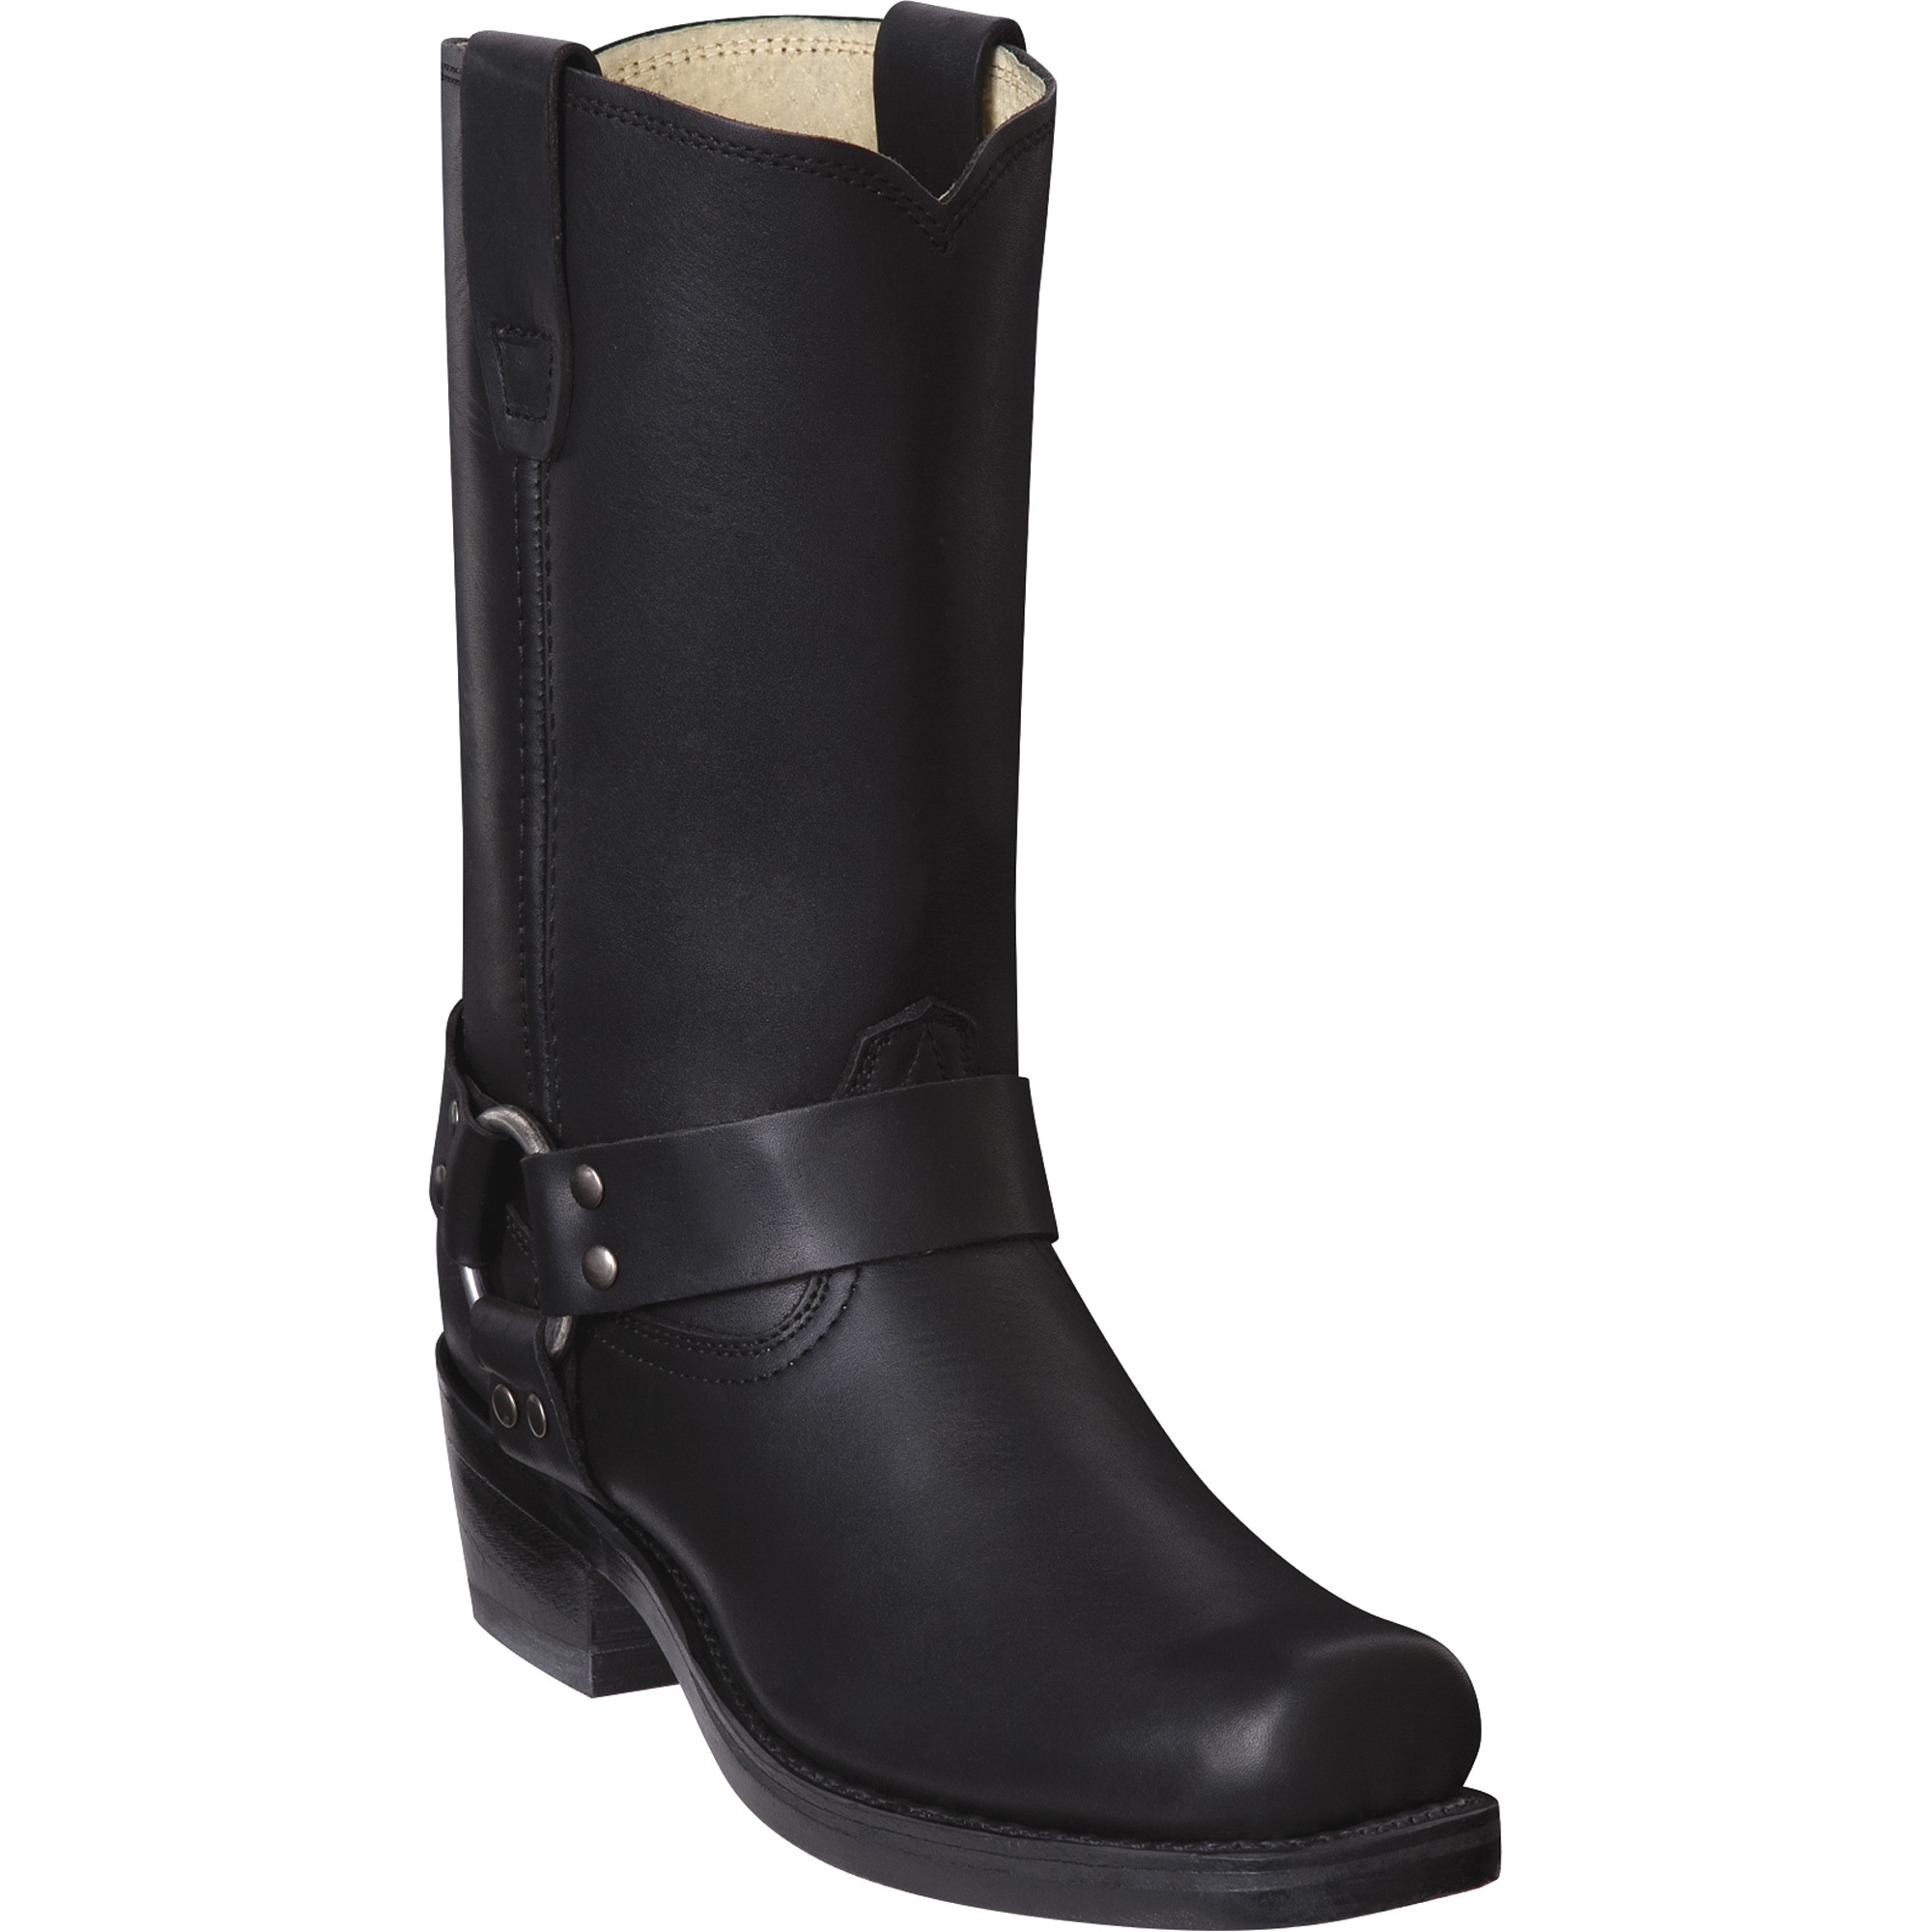 Durango Men's 11Inch Harness Boot - Black, Size 8, Model DB 510